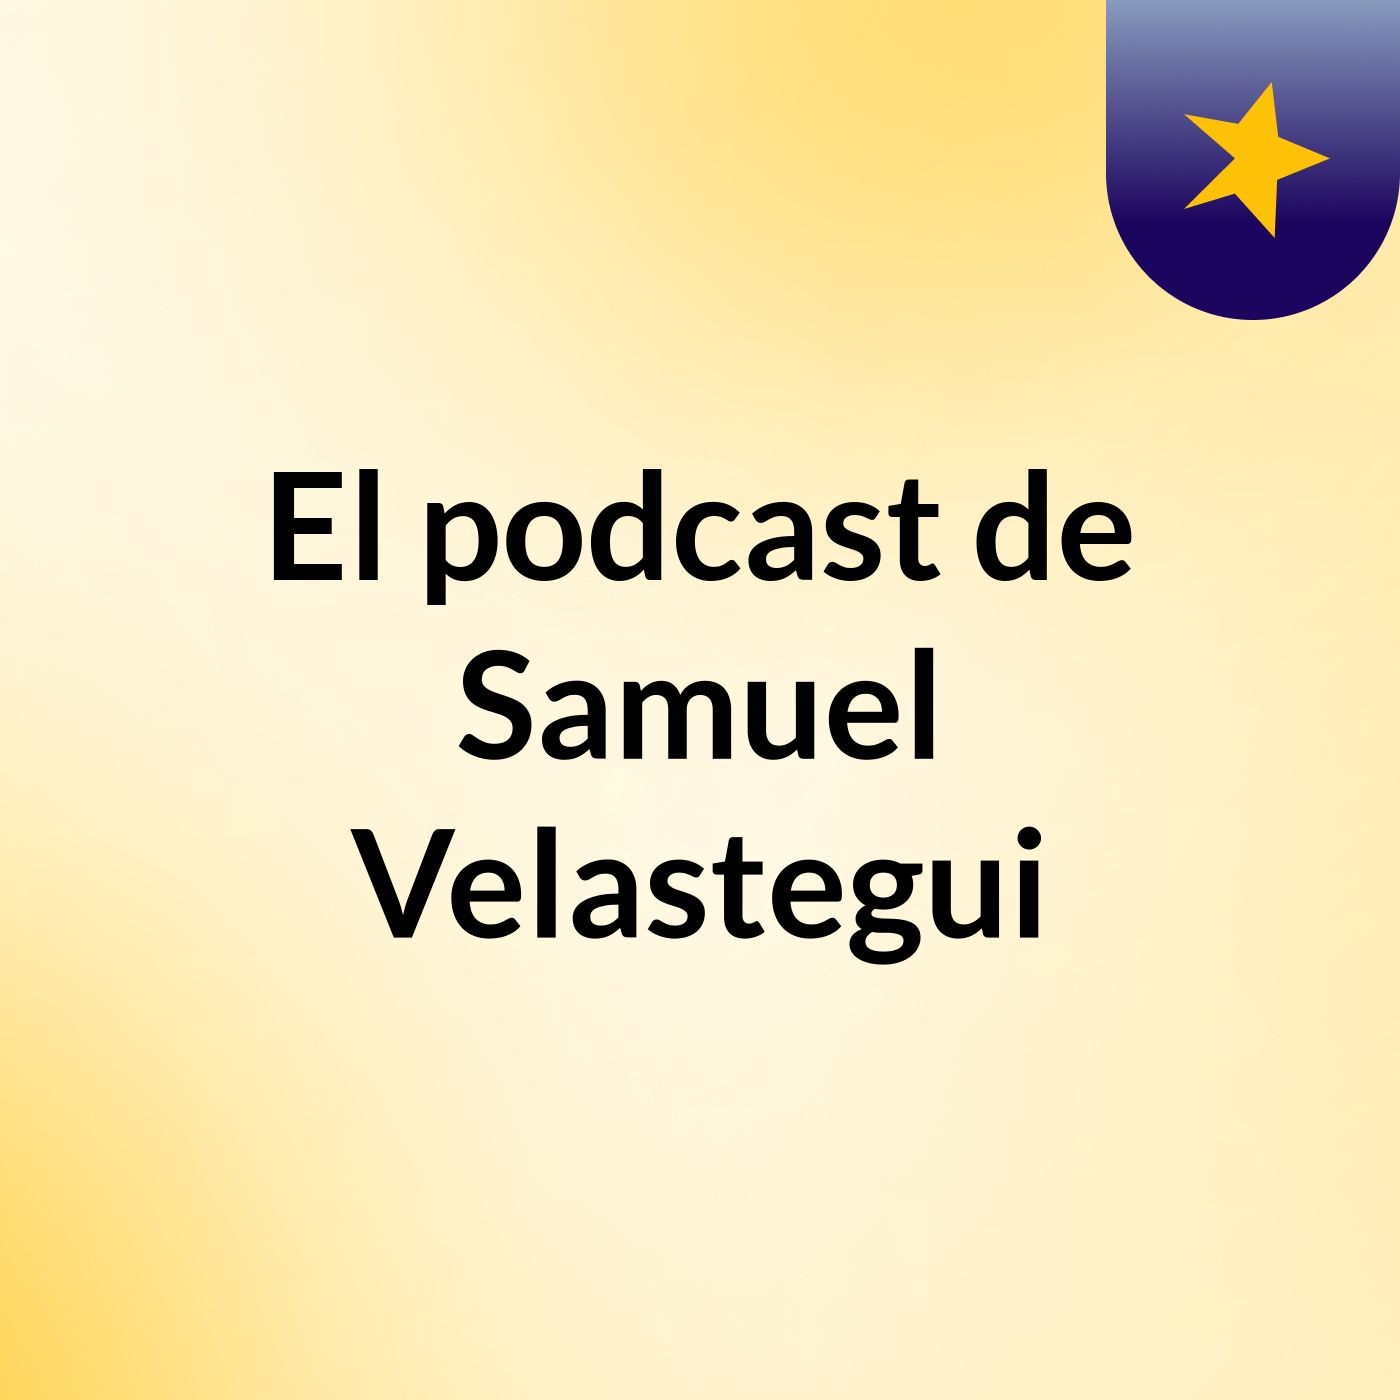 El podcast de Samuel Velastegui